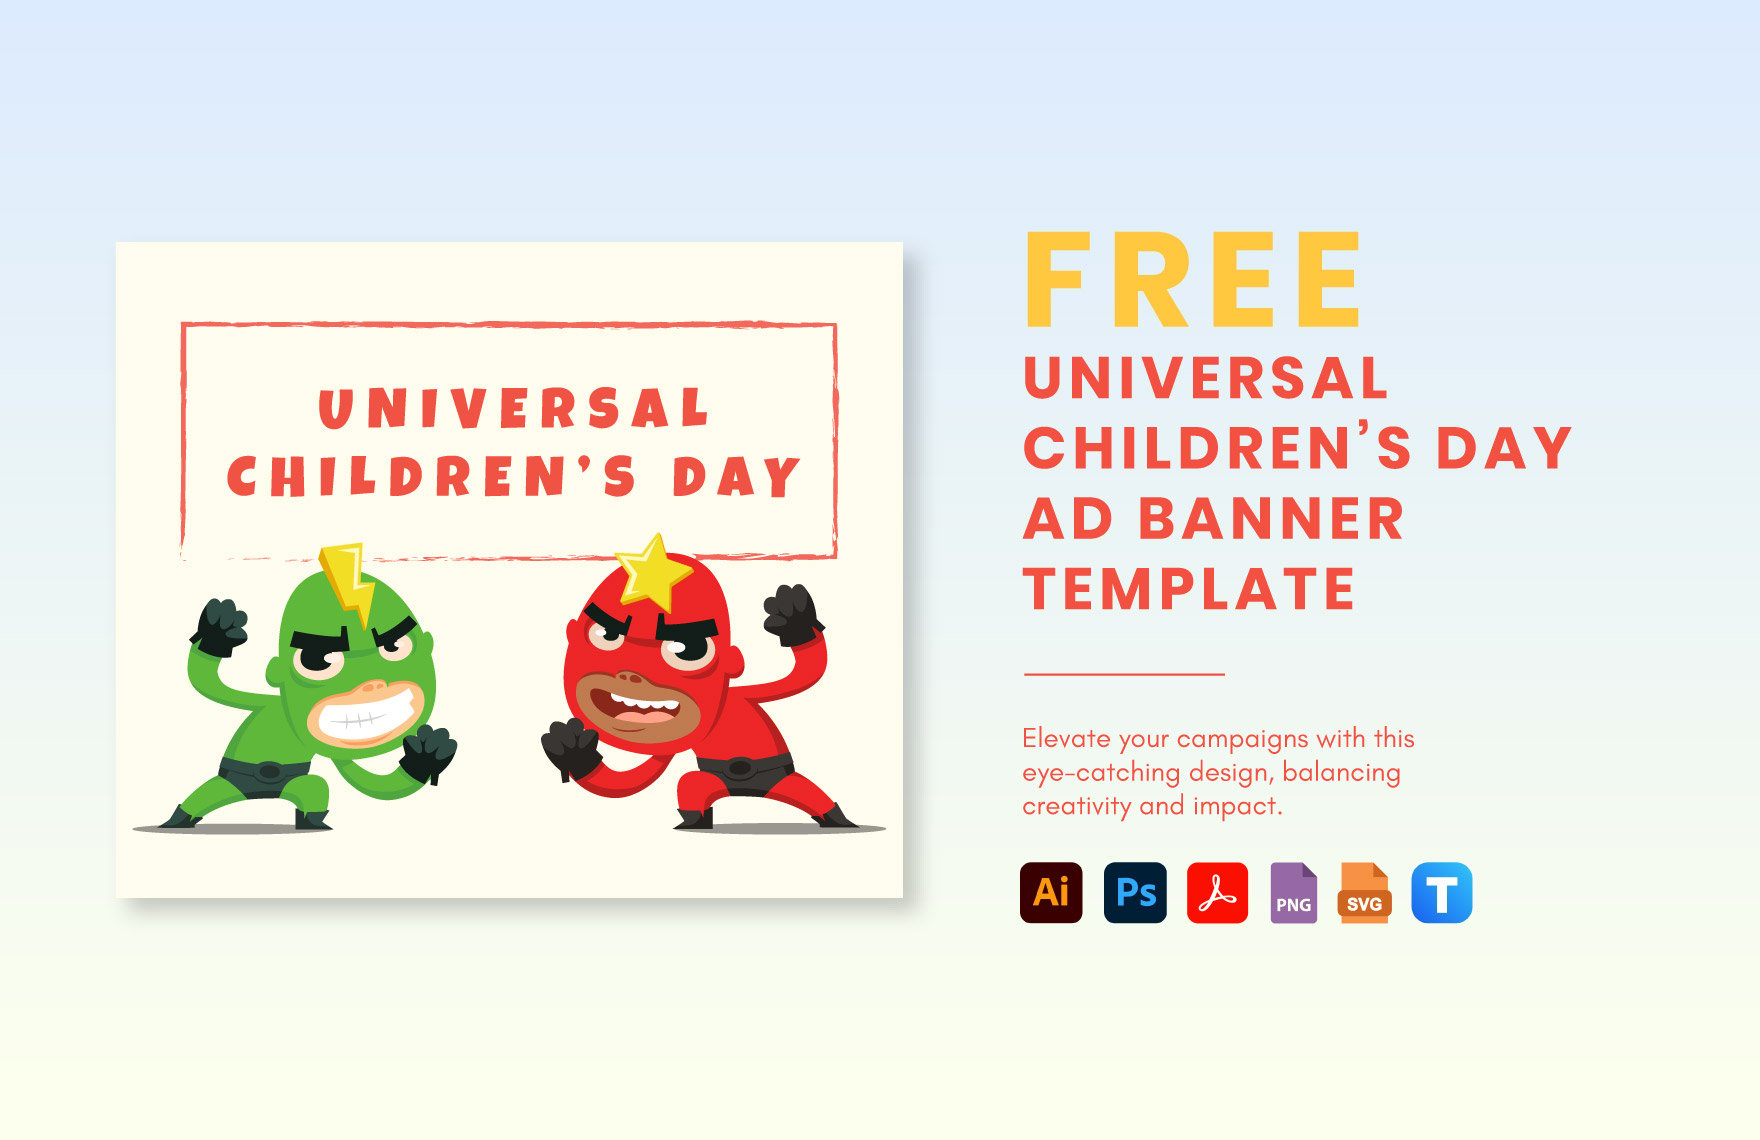 Universal Children’s Day Ad Banner Template